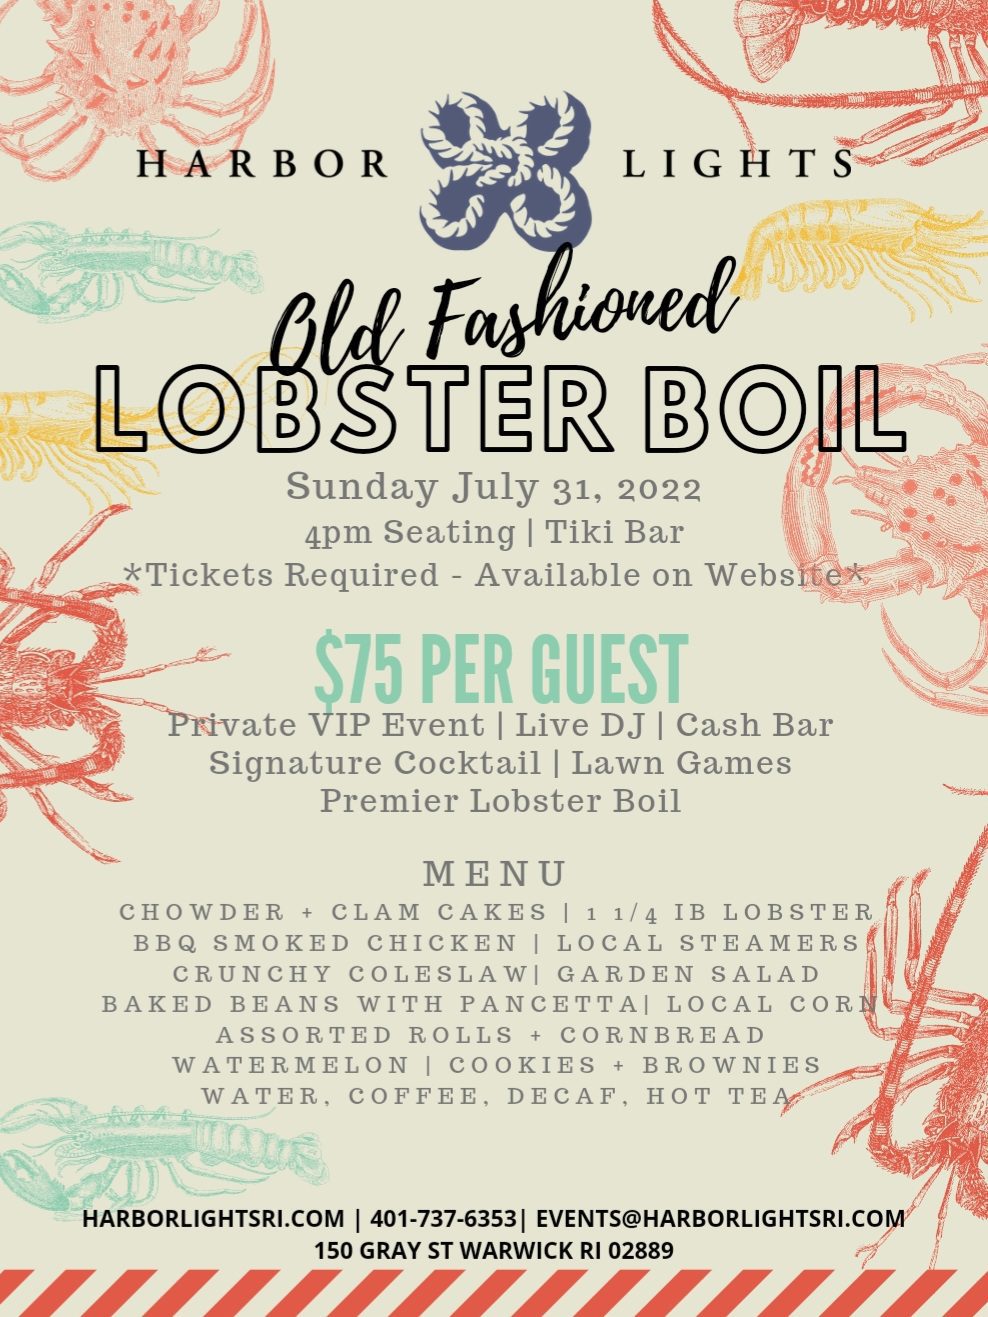 Lobster Boil - Harbor Rhode